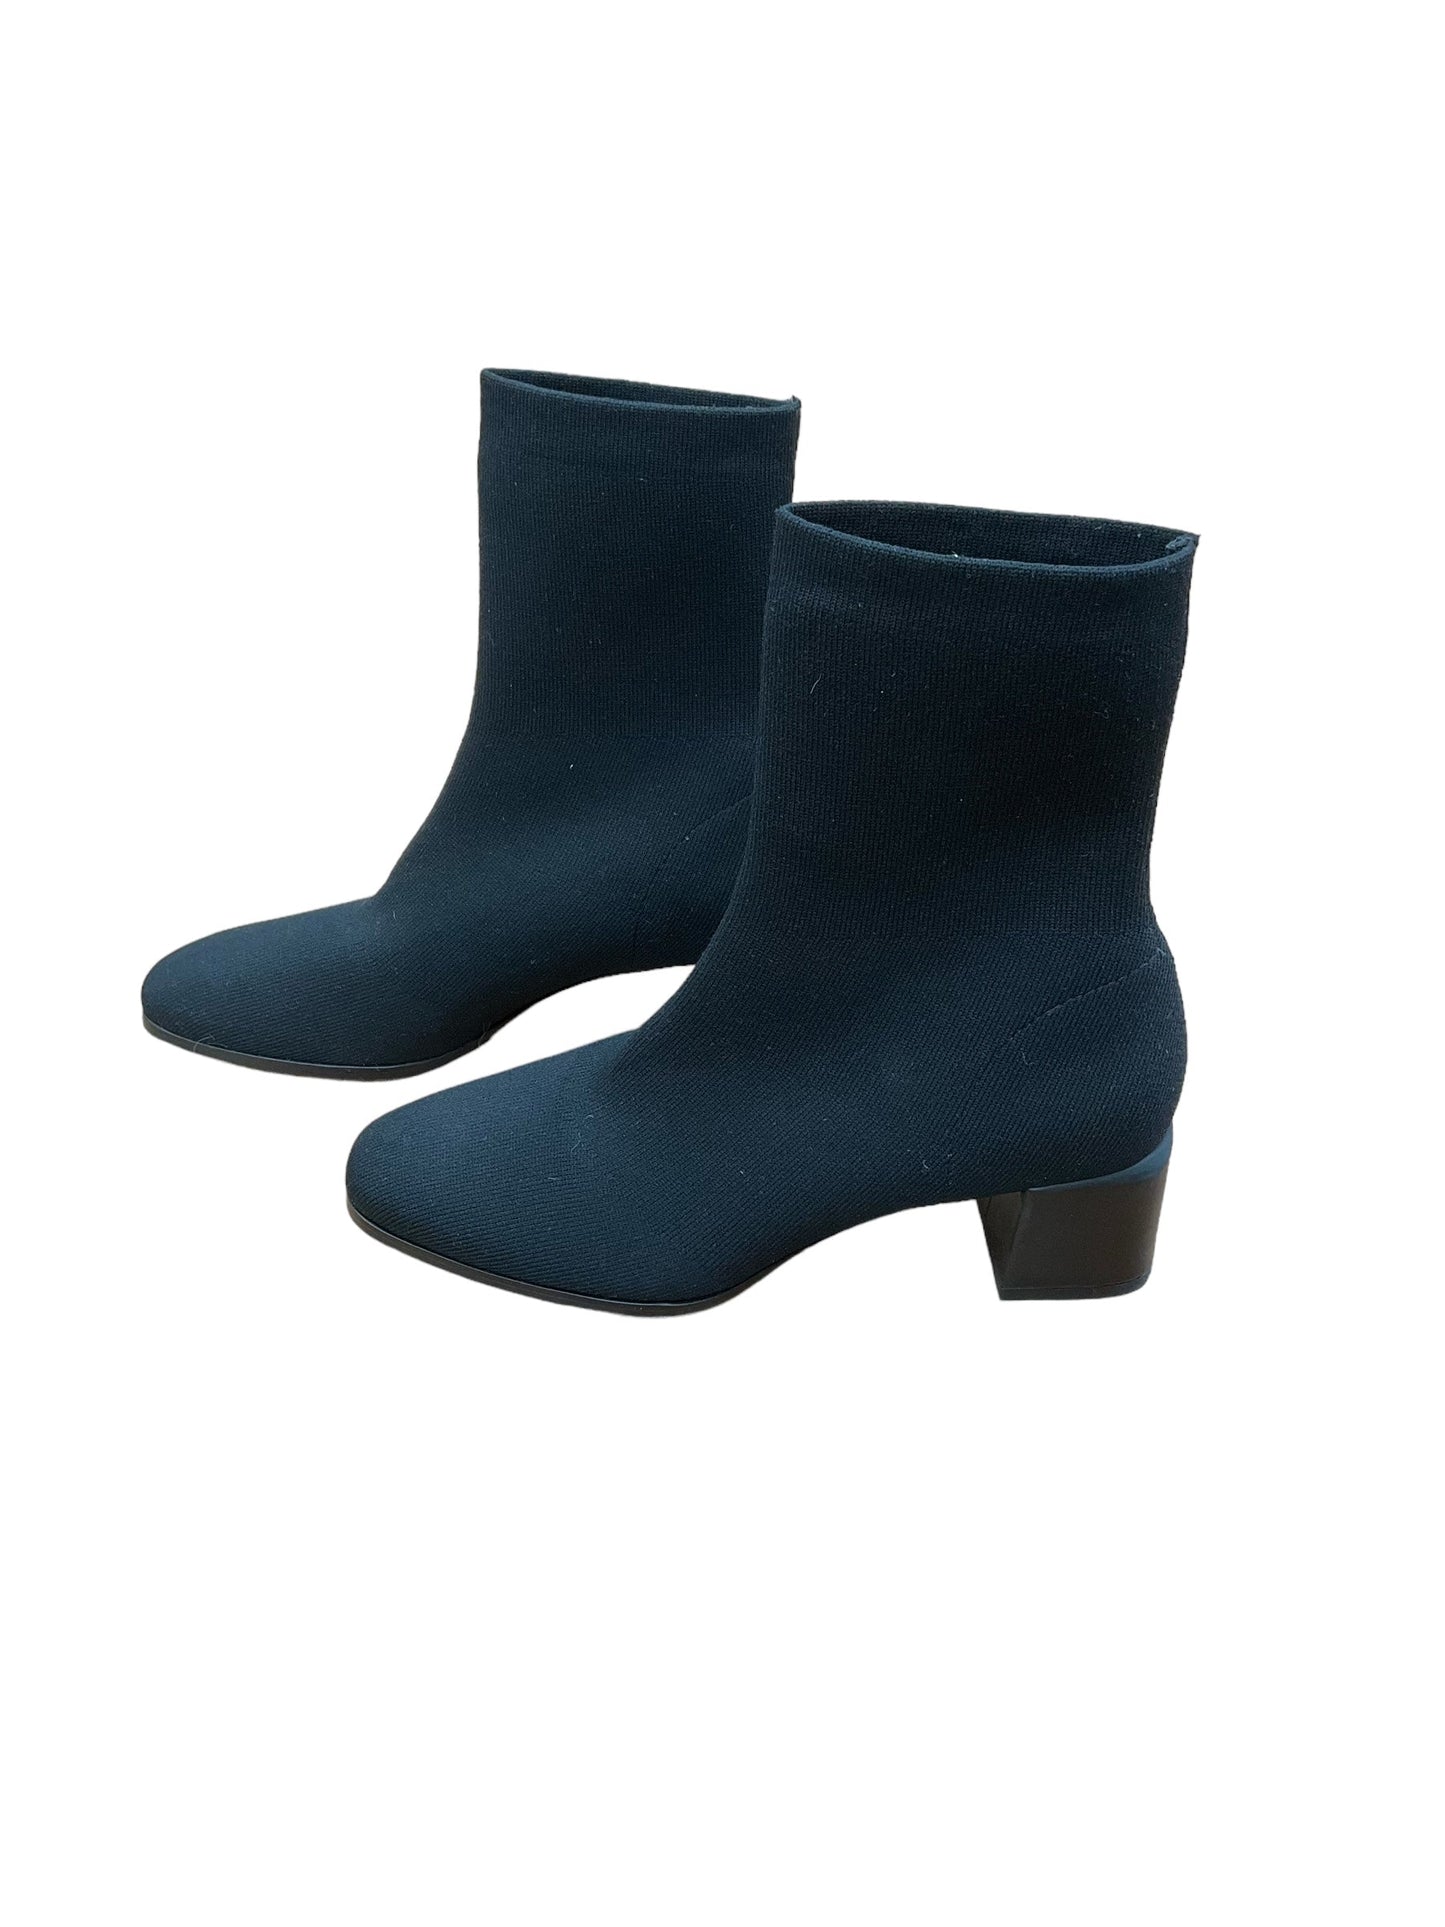 Black Boots Ankle Heels Via Spiga, Size 8